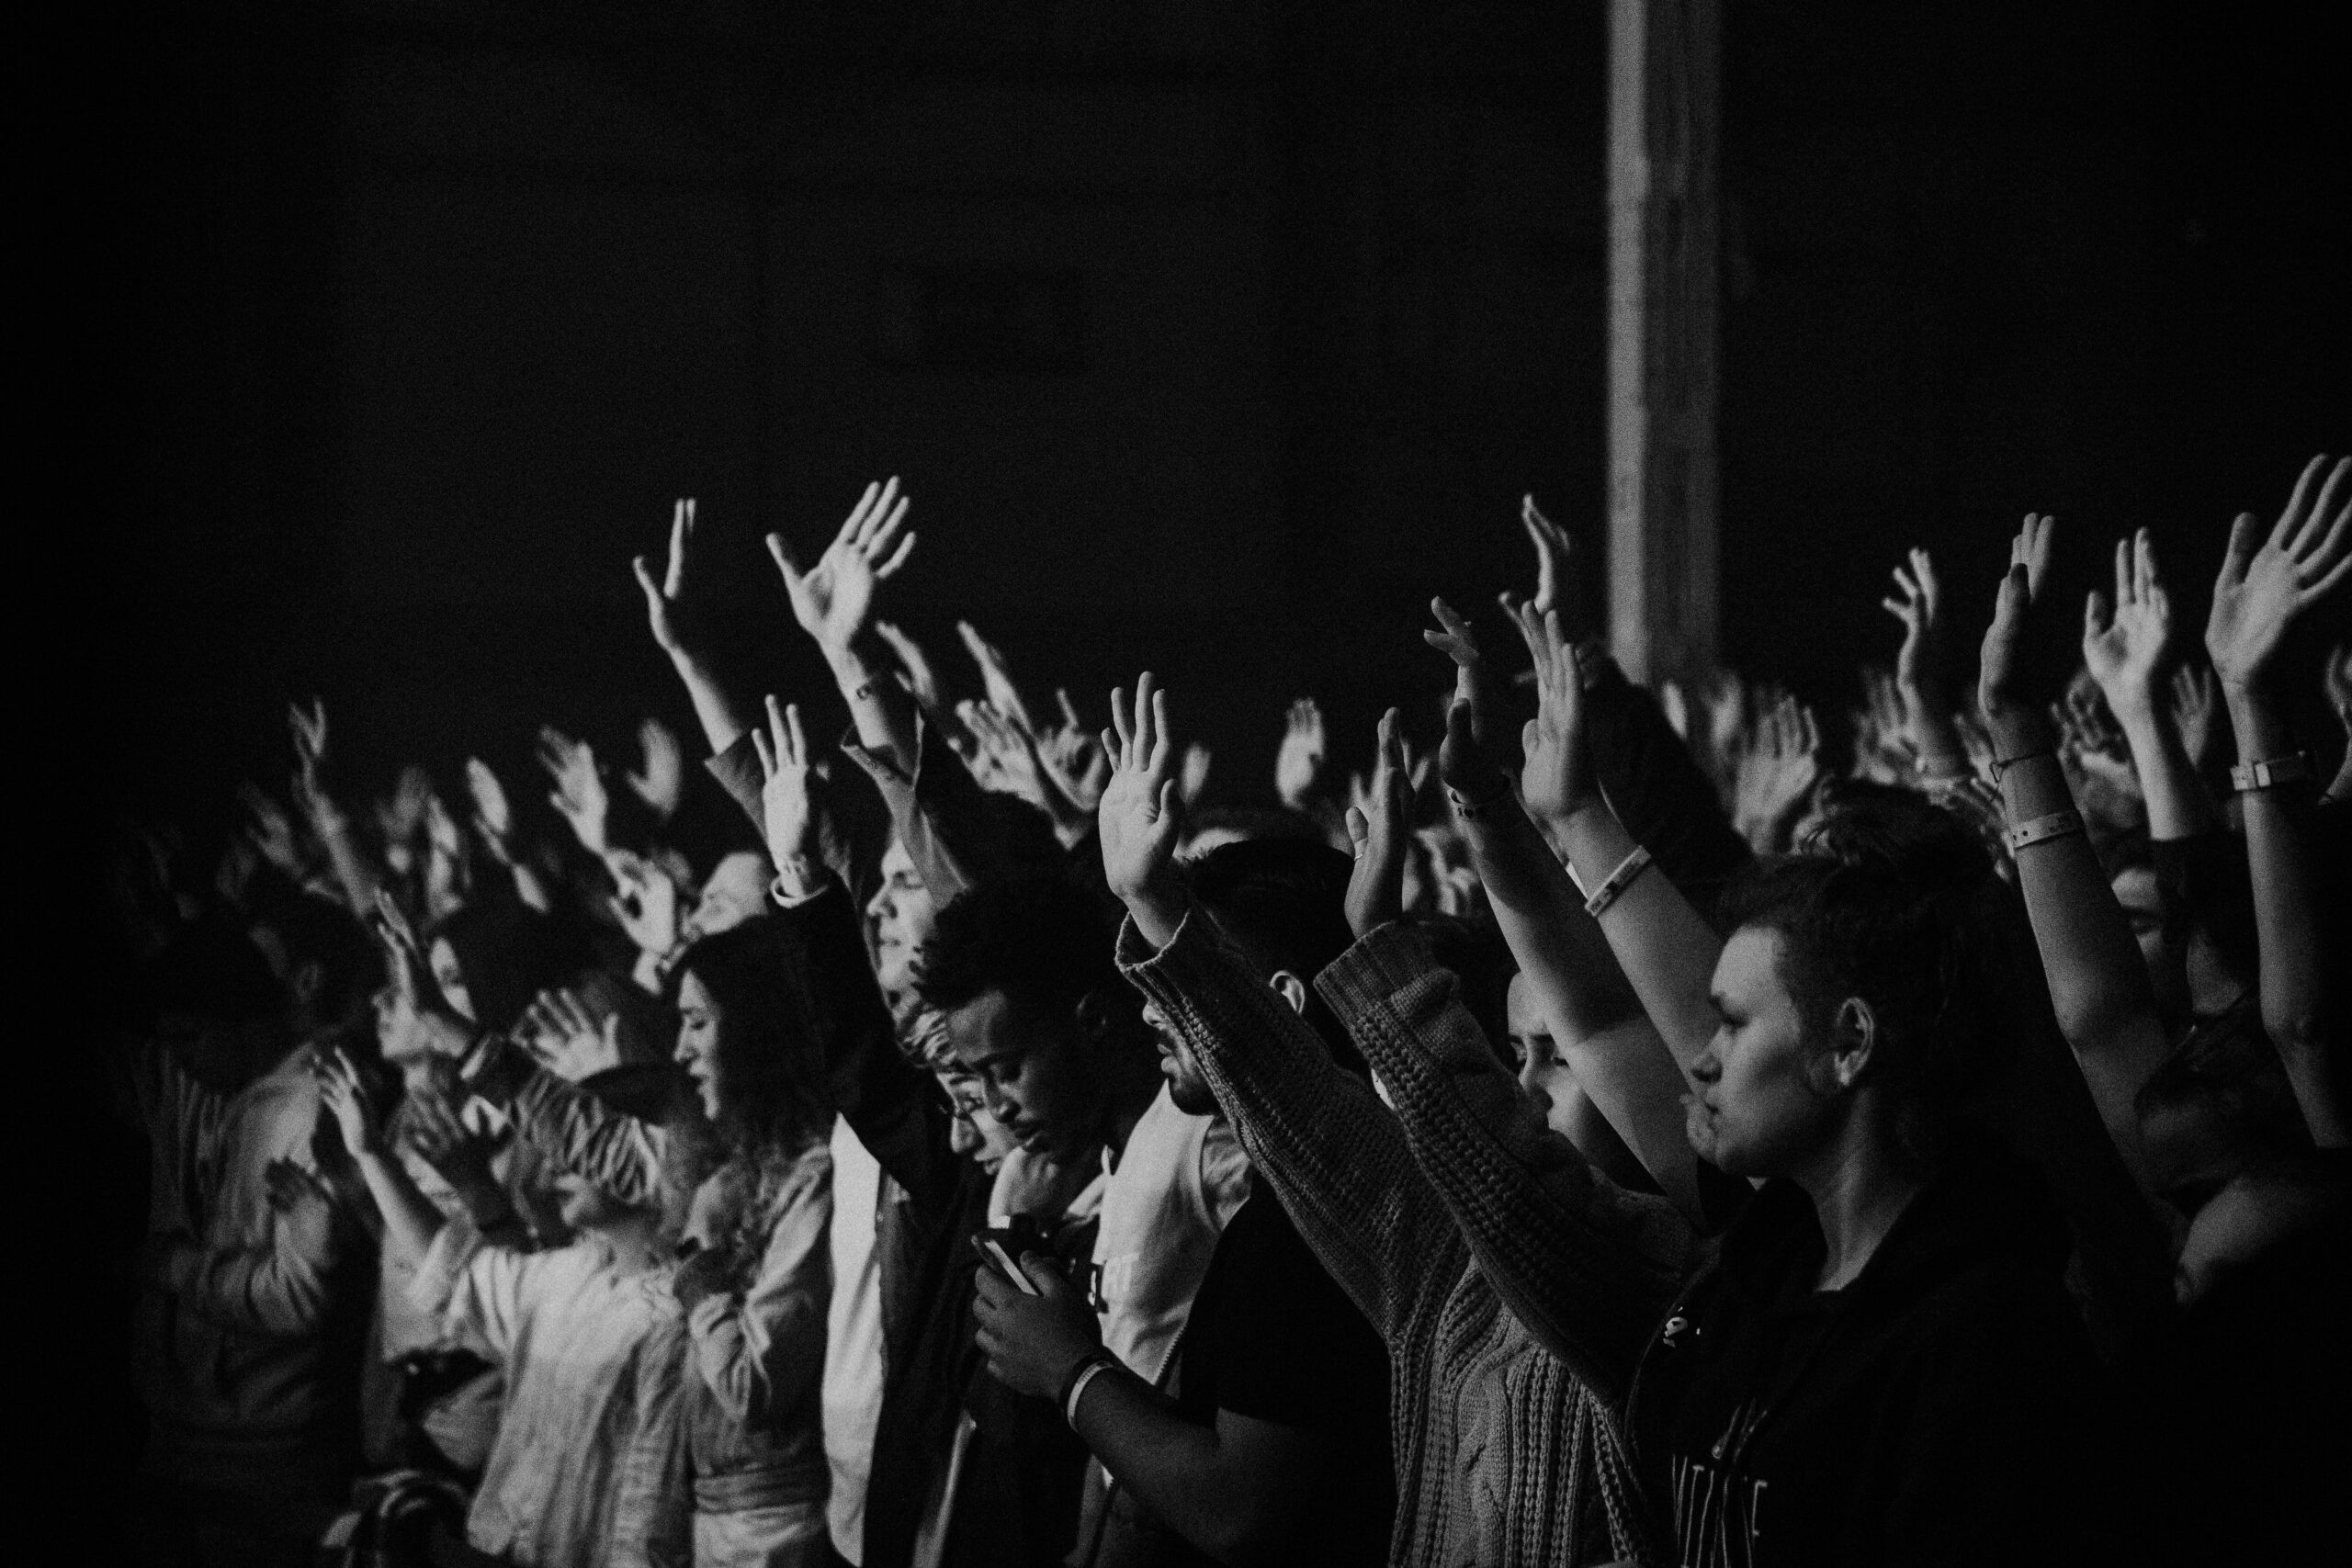 A spiritual community enthusiastically raising their hands together.